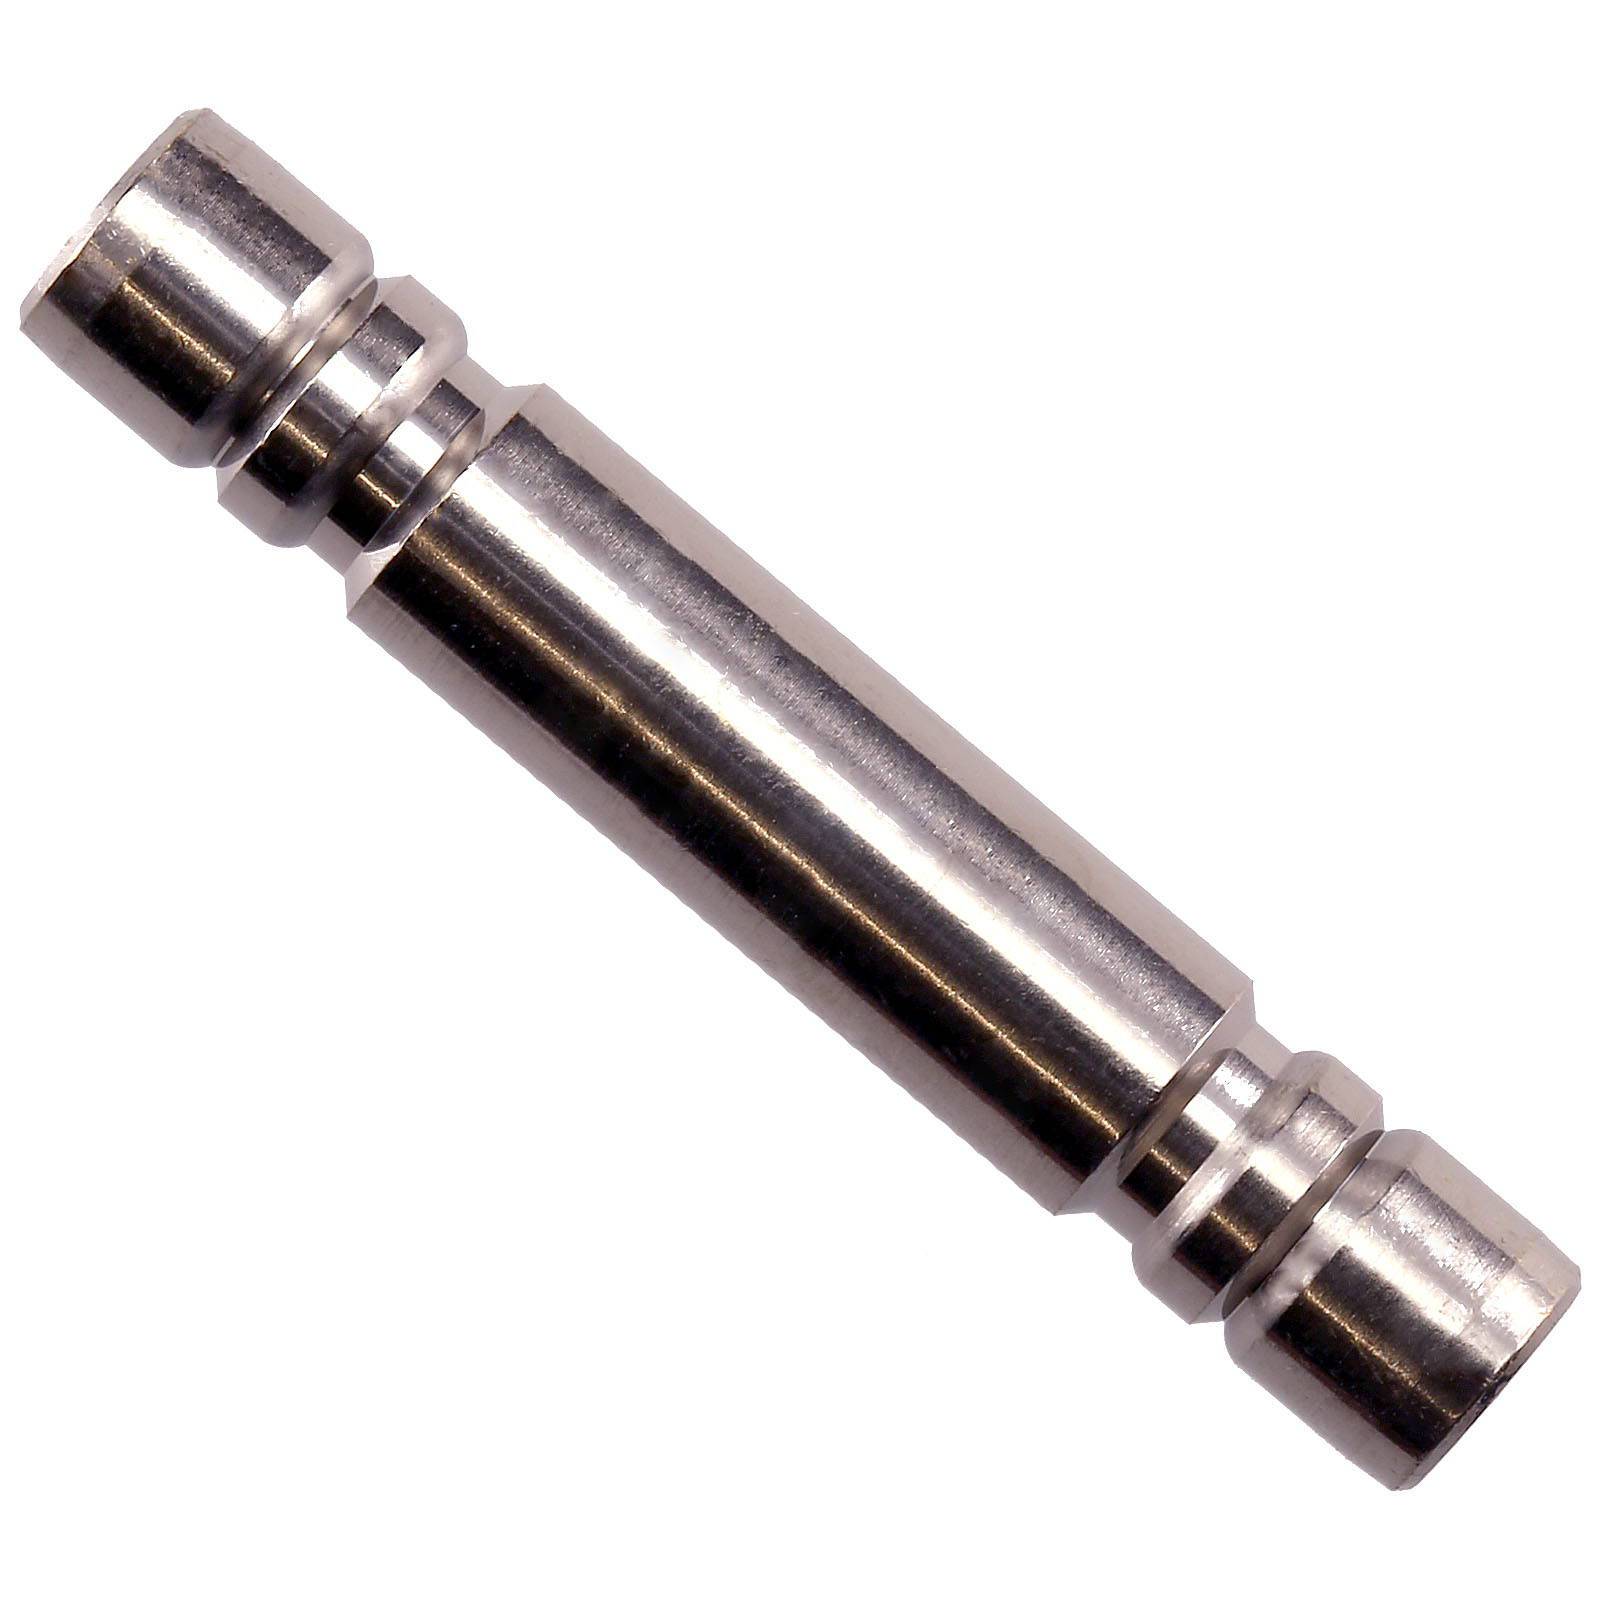 ADA Joint Stick Metal - Коннектор металлический для трубок СО2, 3 шт.